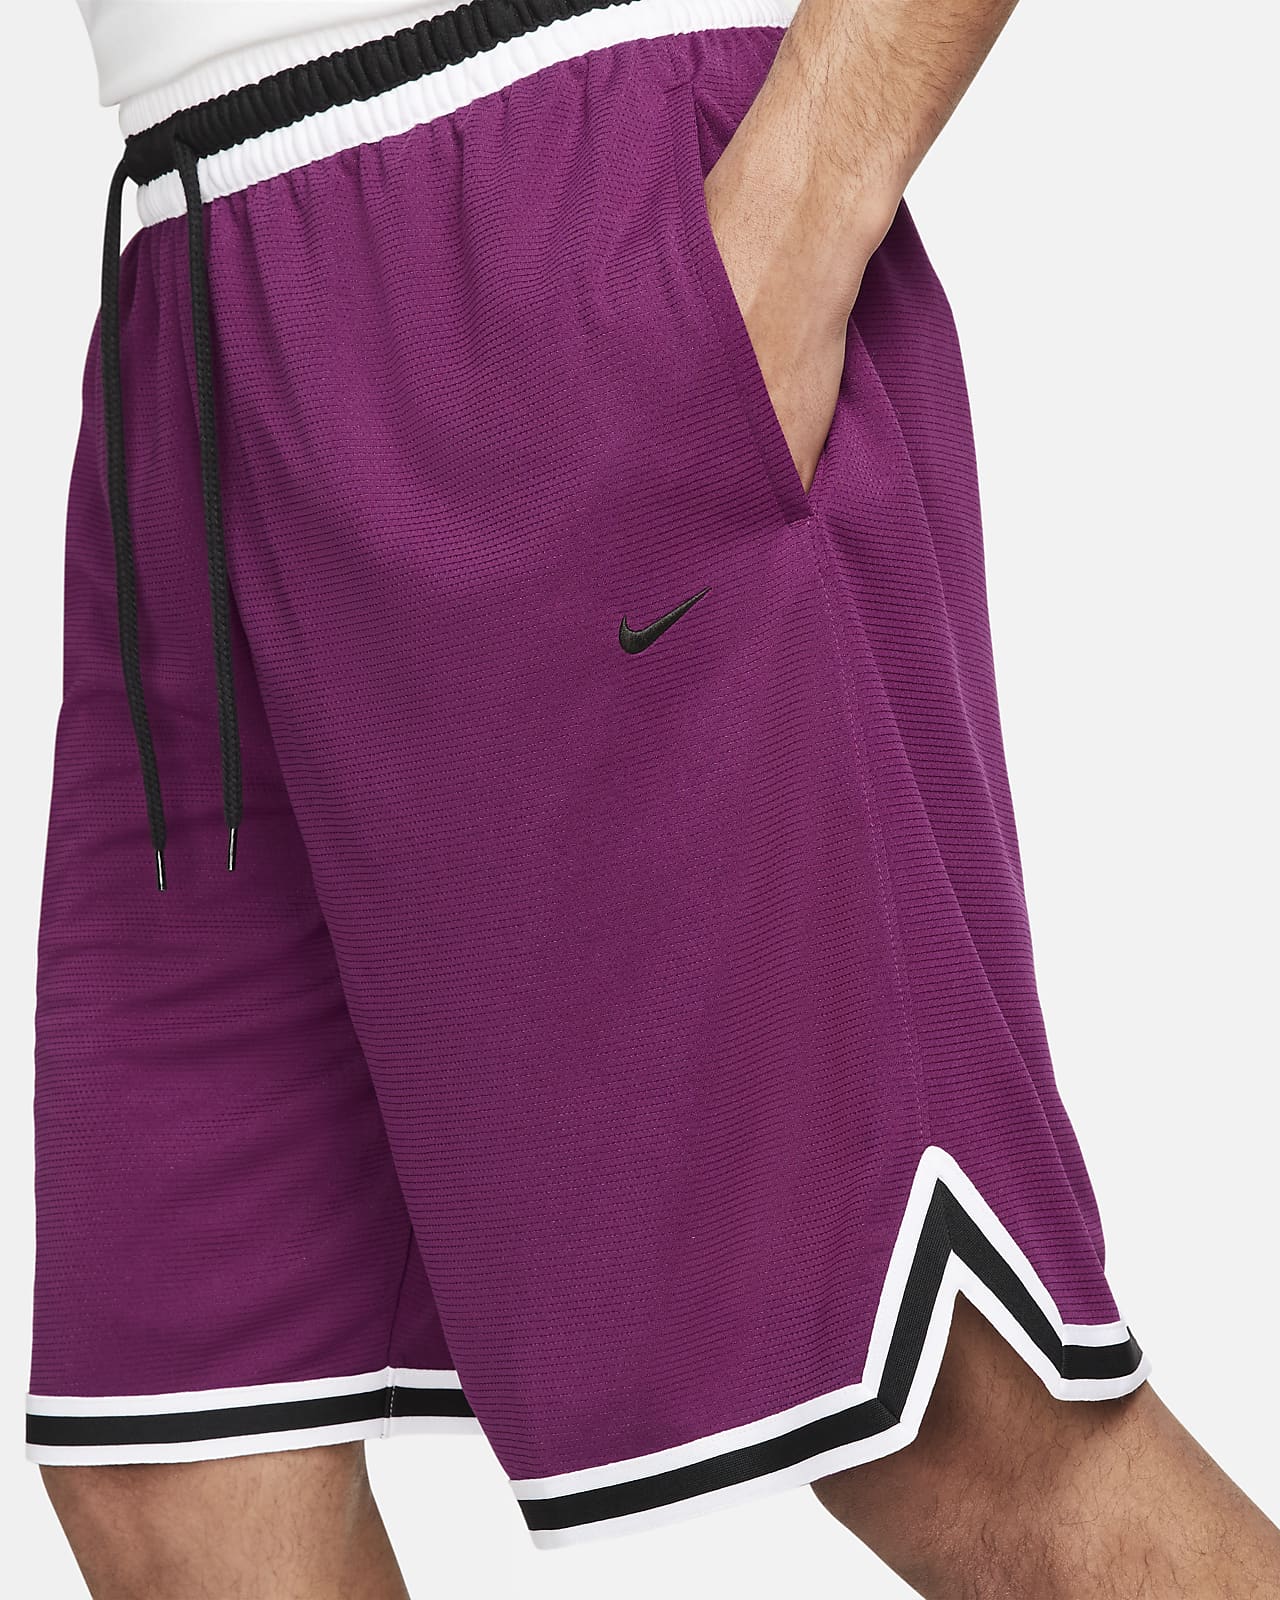 Nike Men's Ja Dri-FIT 2-in-1 4 Basketball Shorts in Black, Size: Large | FQ1022-010